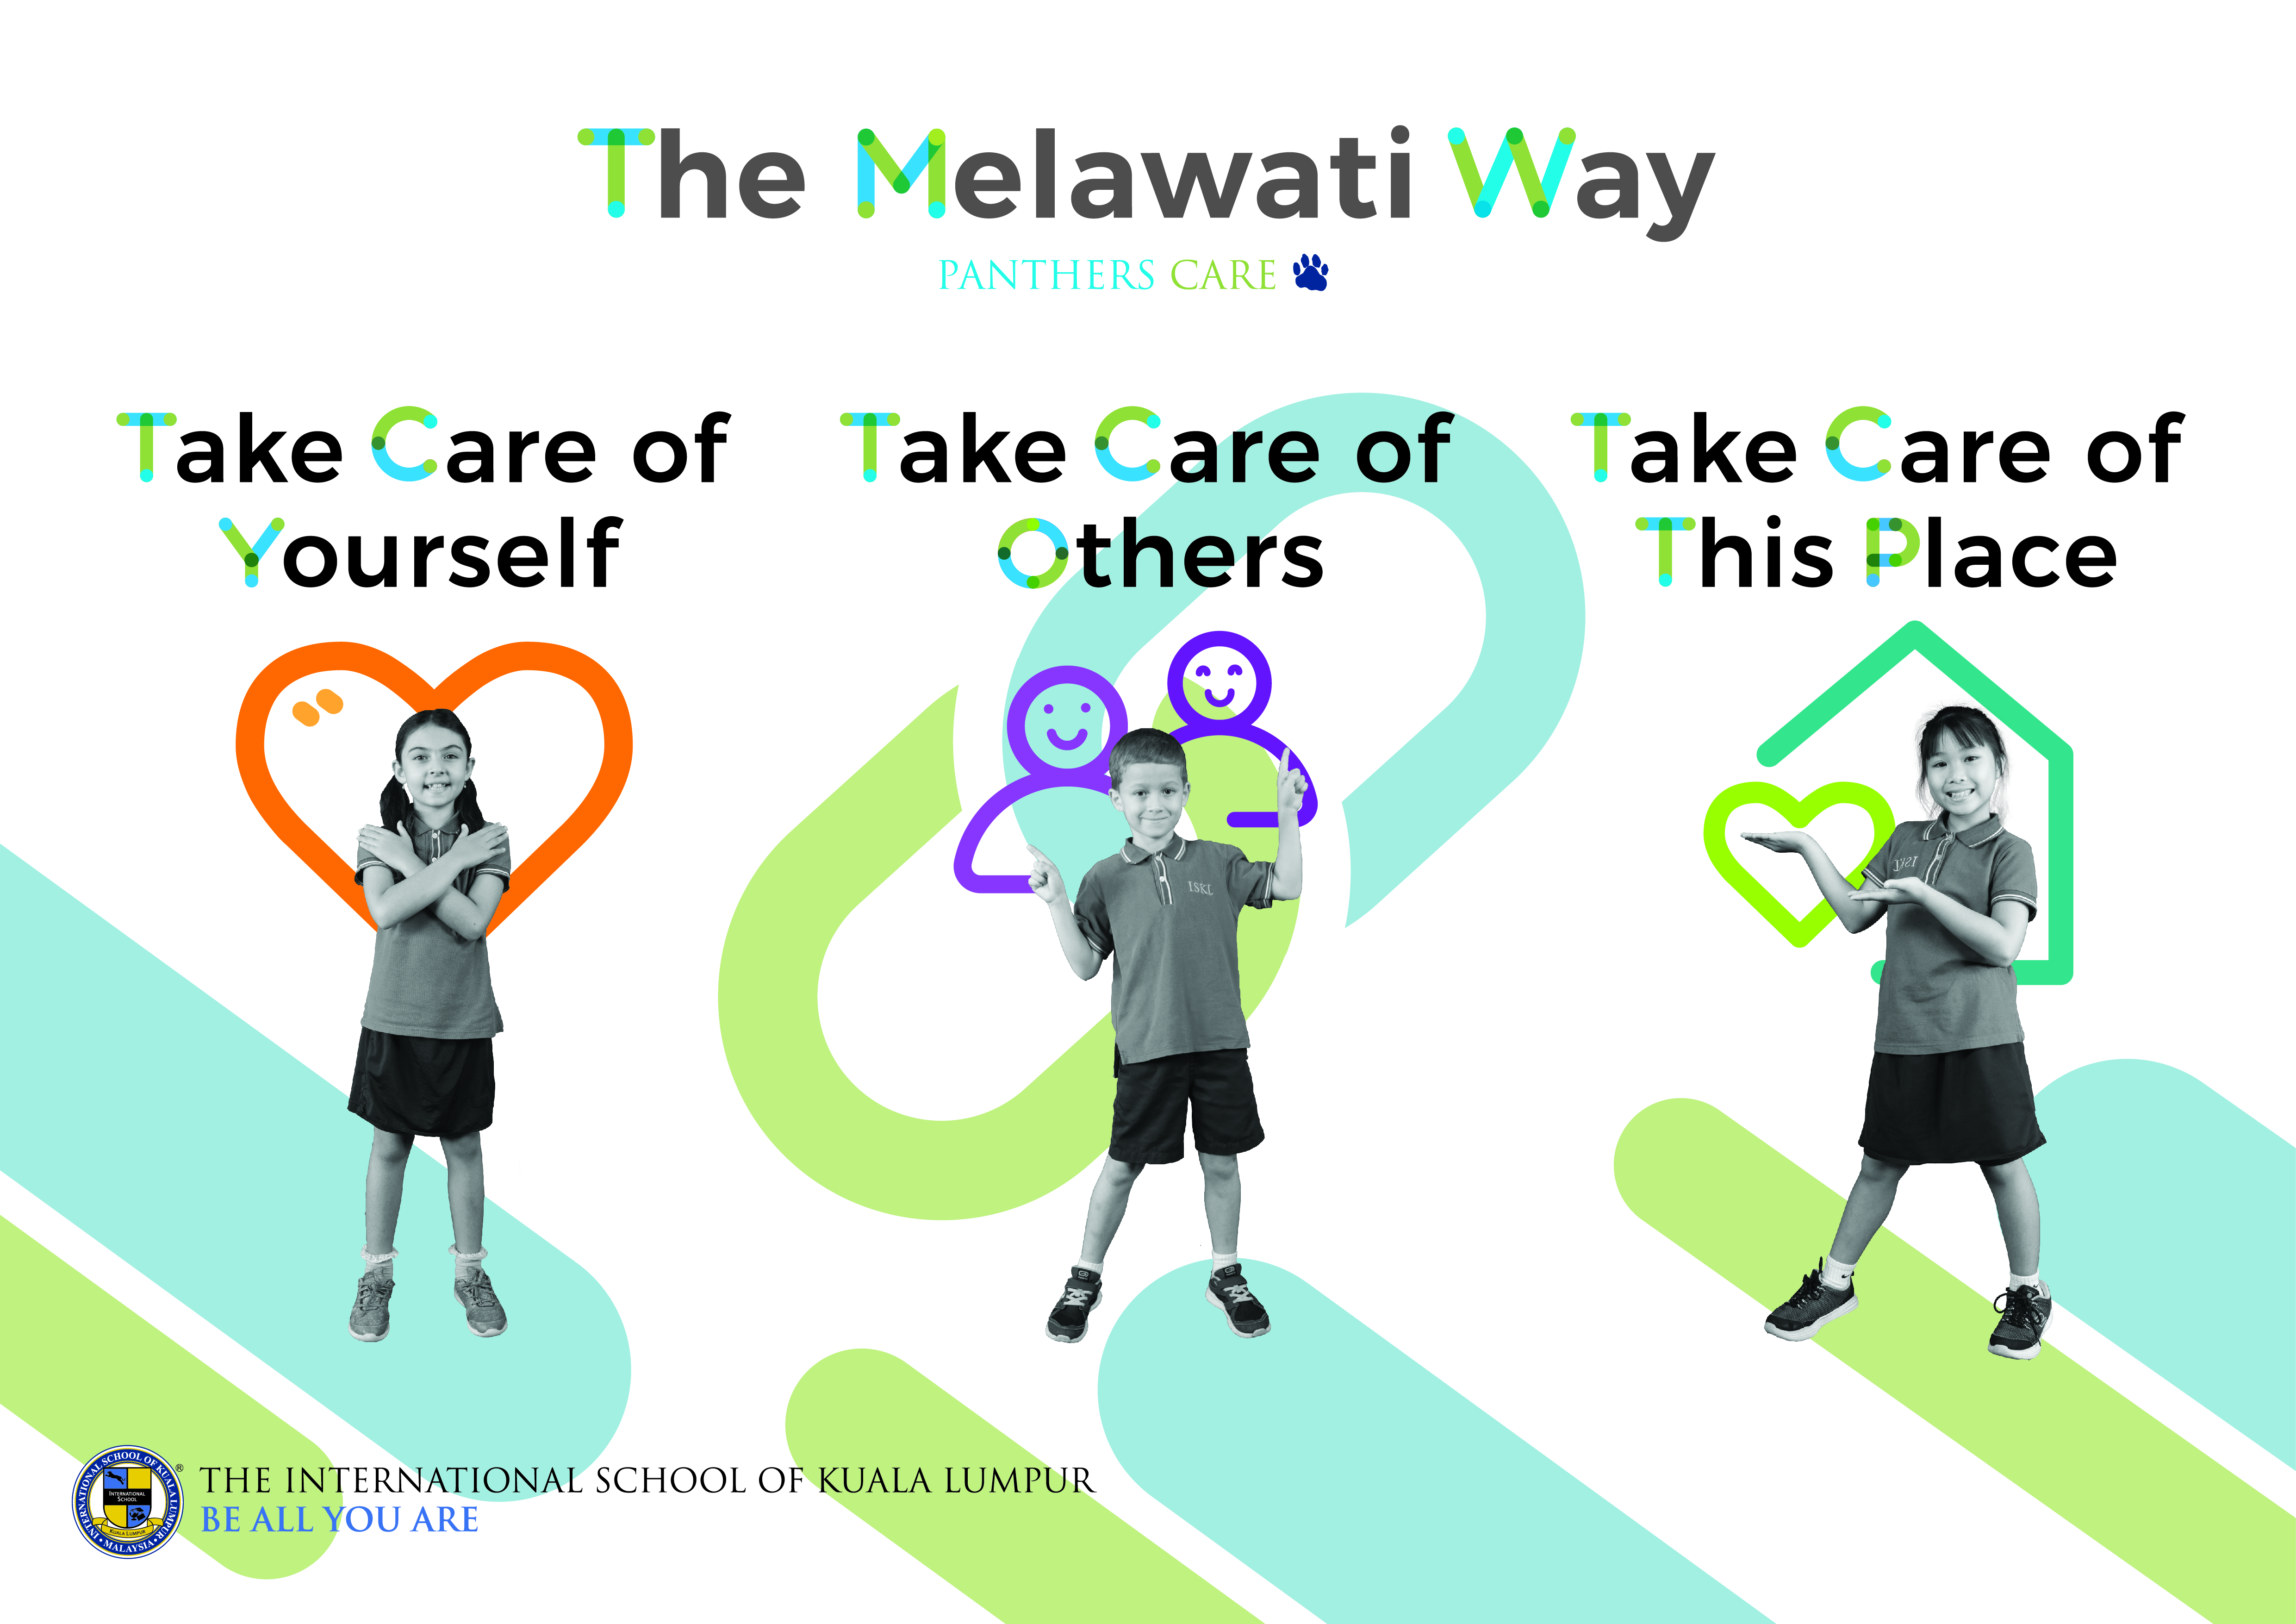 The Melawati Way